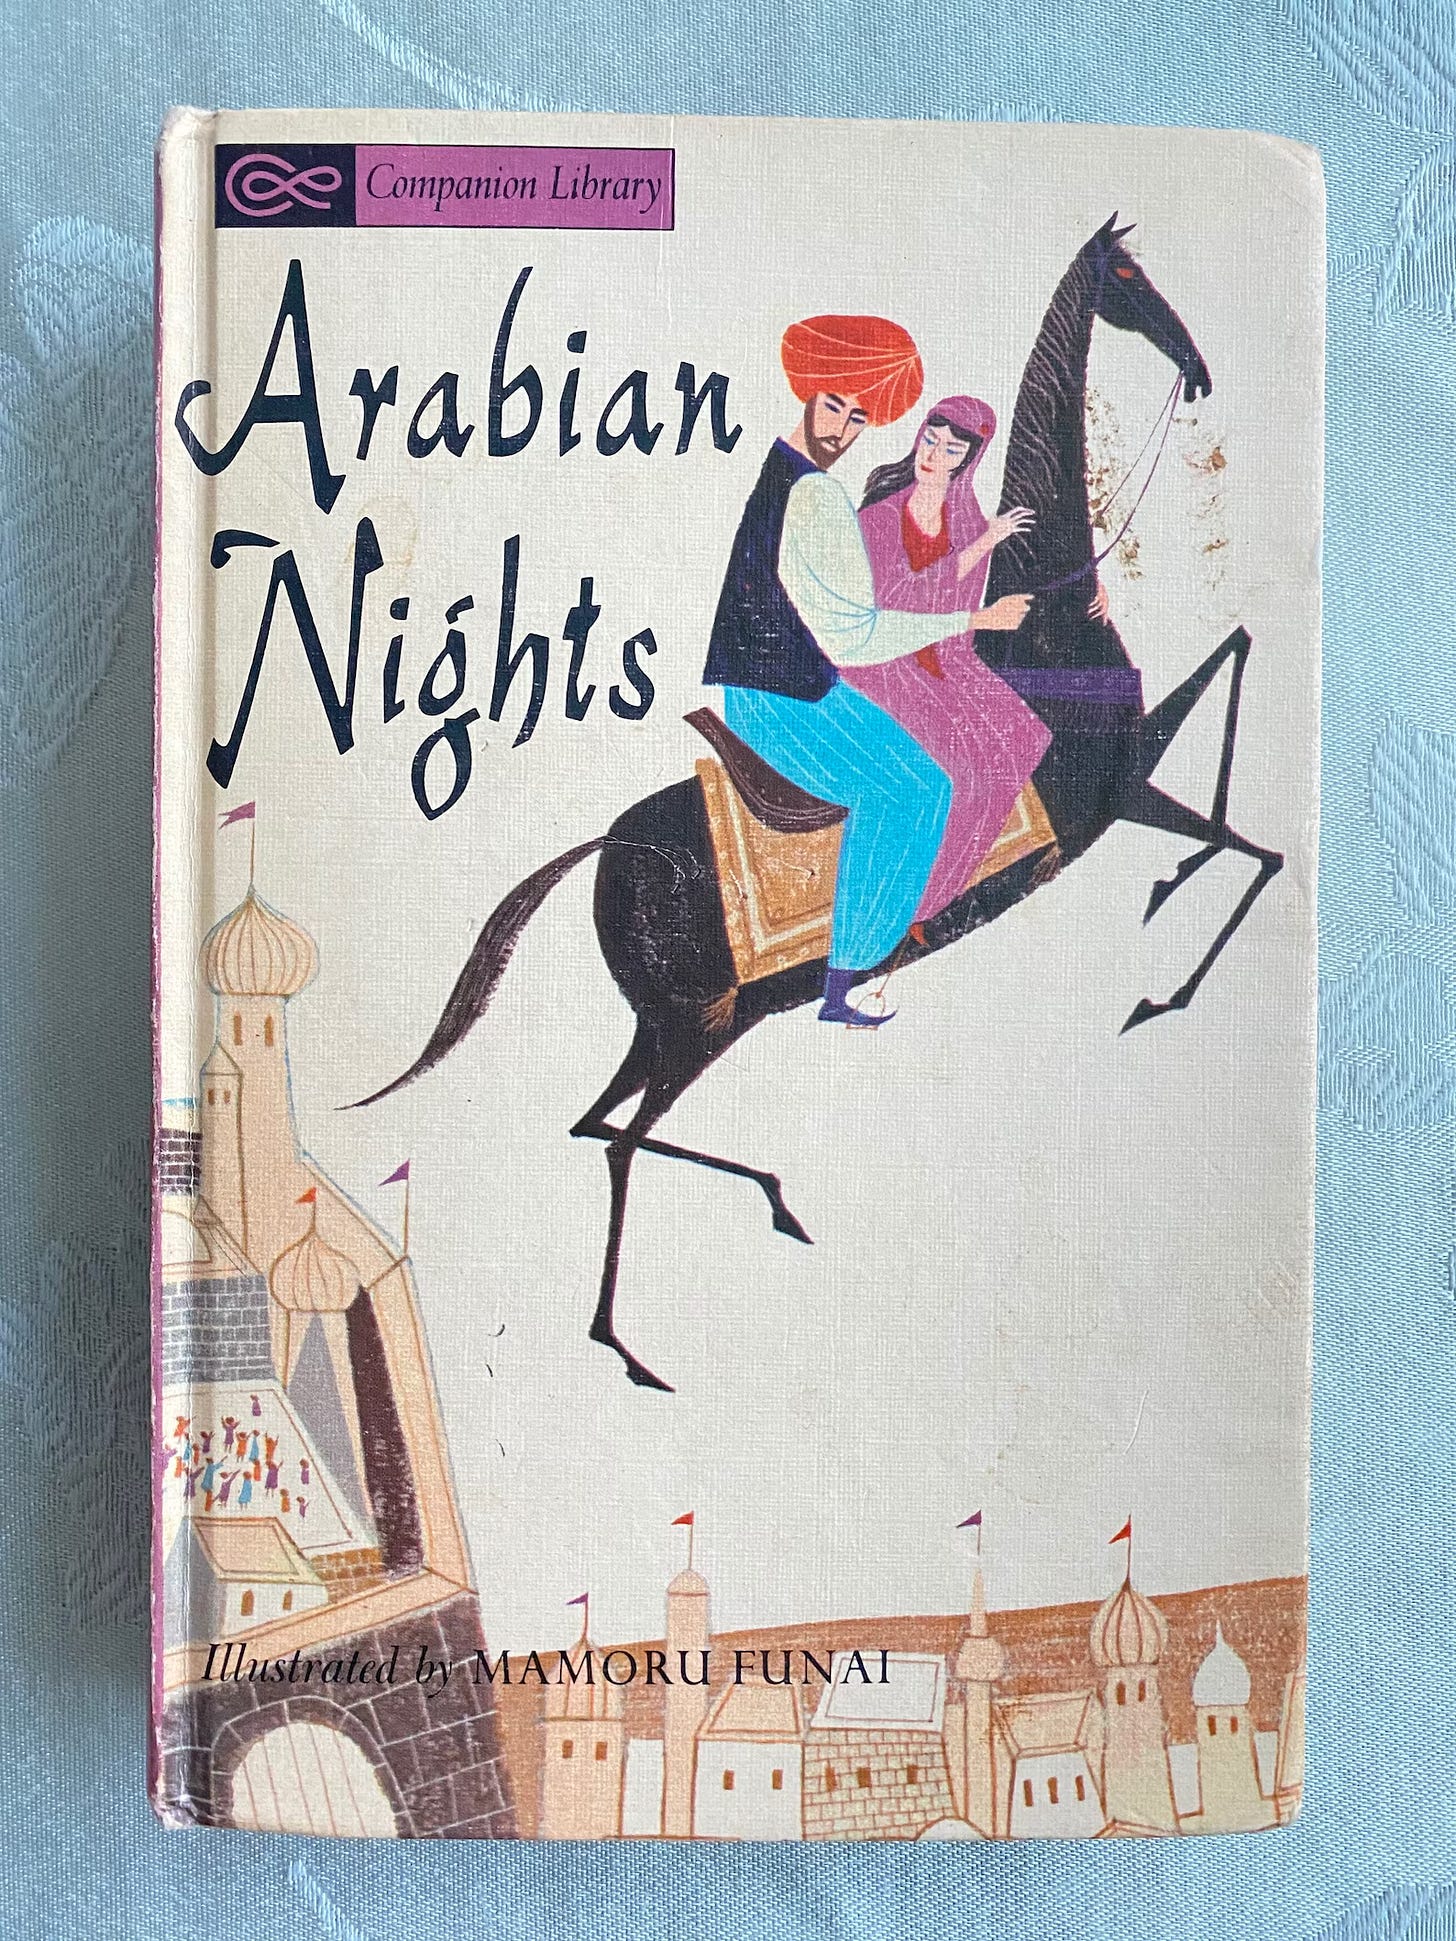 1963 American edition of Arabian Nights